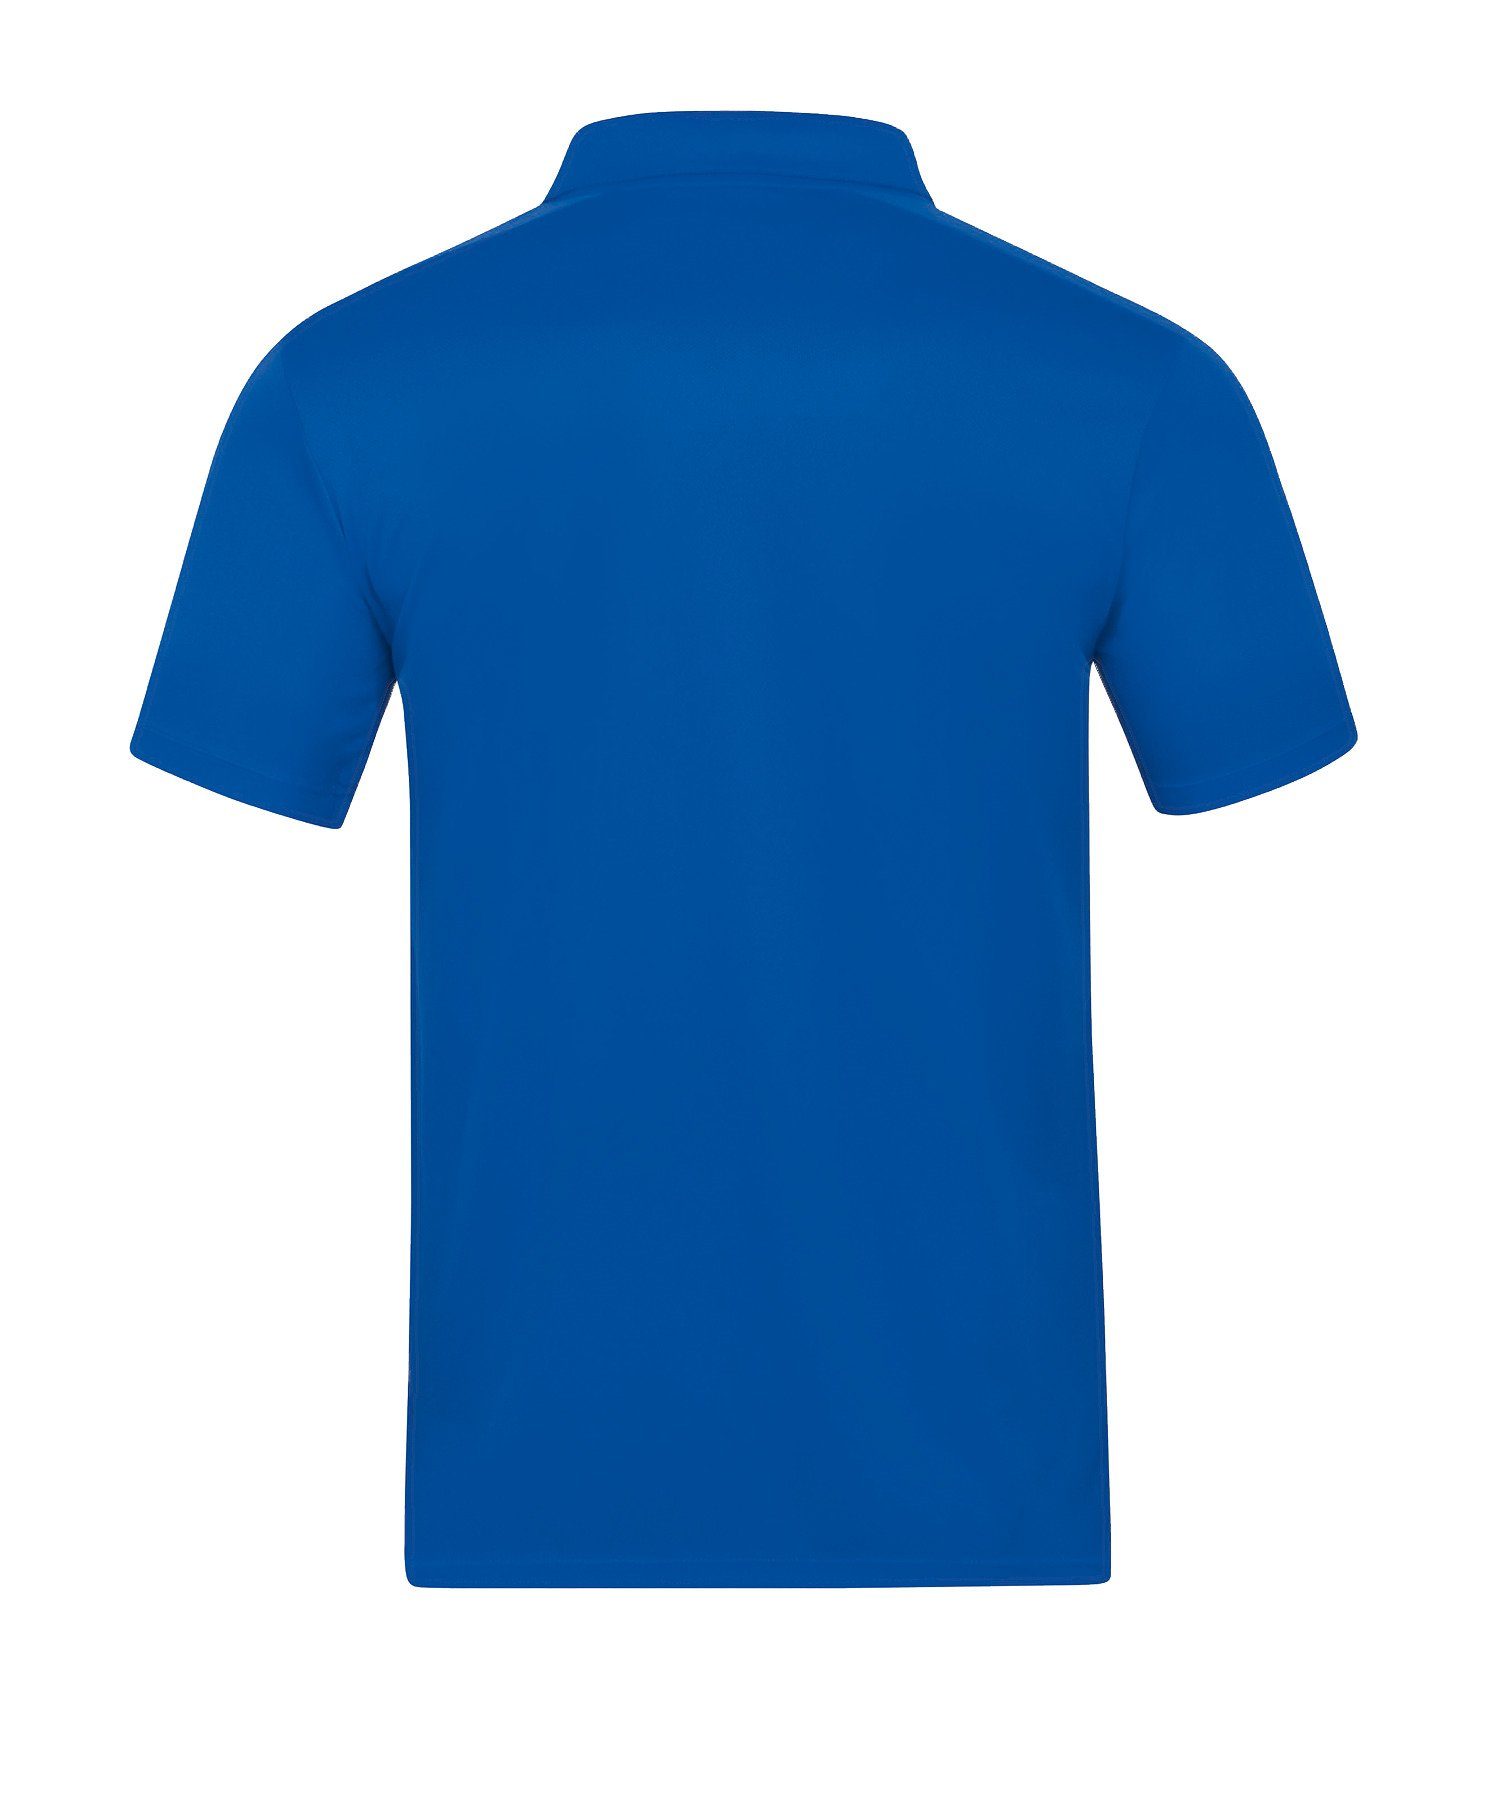 Jako Classico default T-Shirt Poloshirt Blauweiss